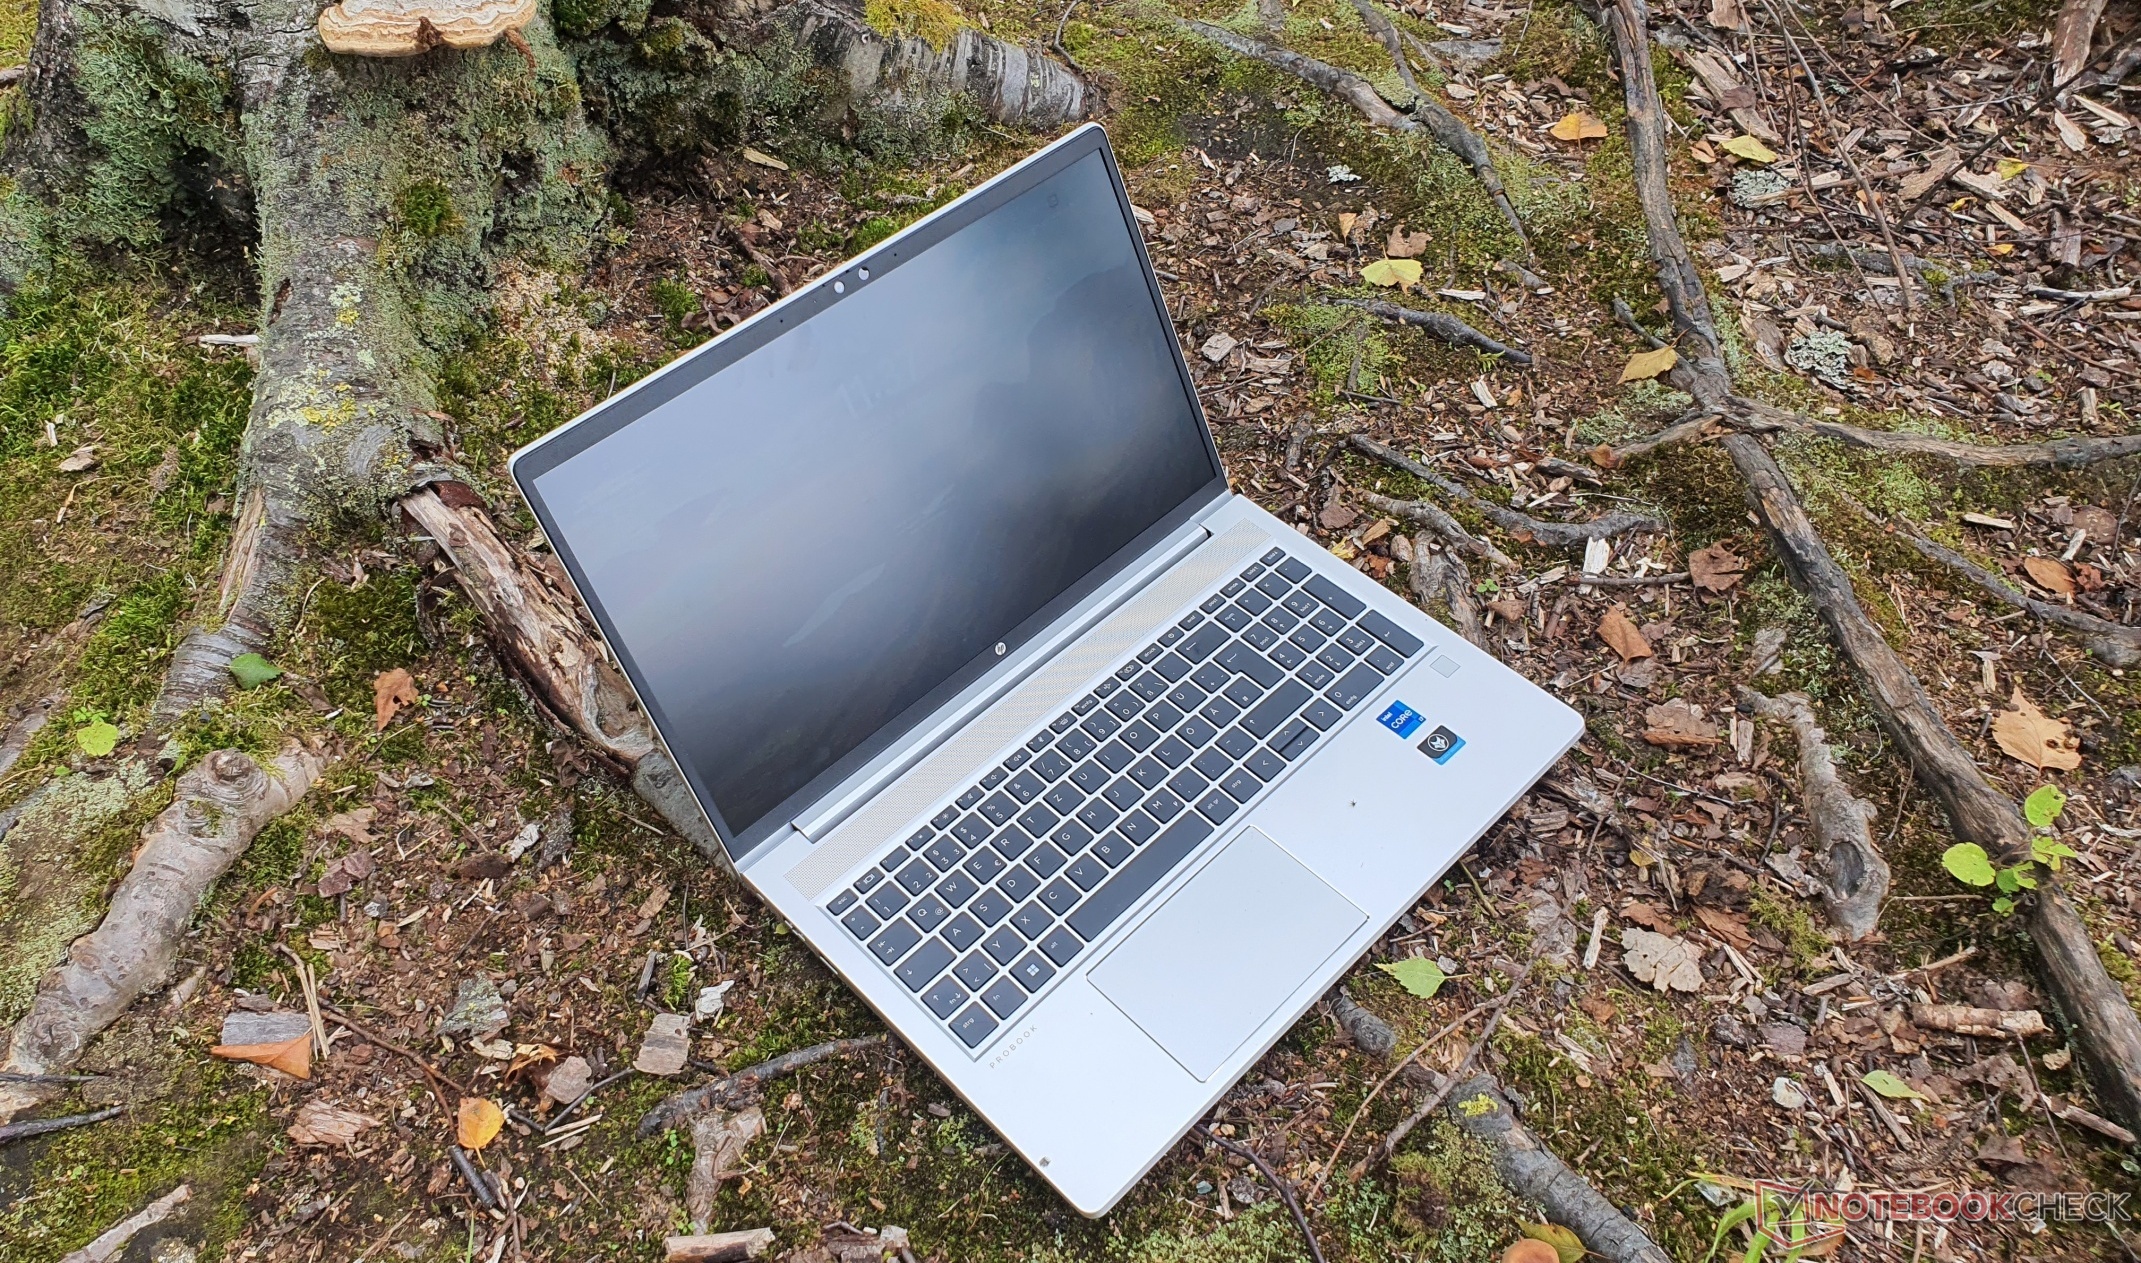 HP ProBook 450 G9 15.6 Commercial Laptop Computer - Silver; Intel